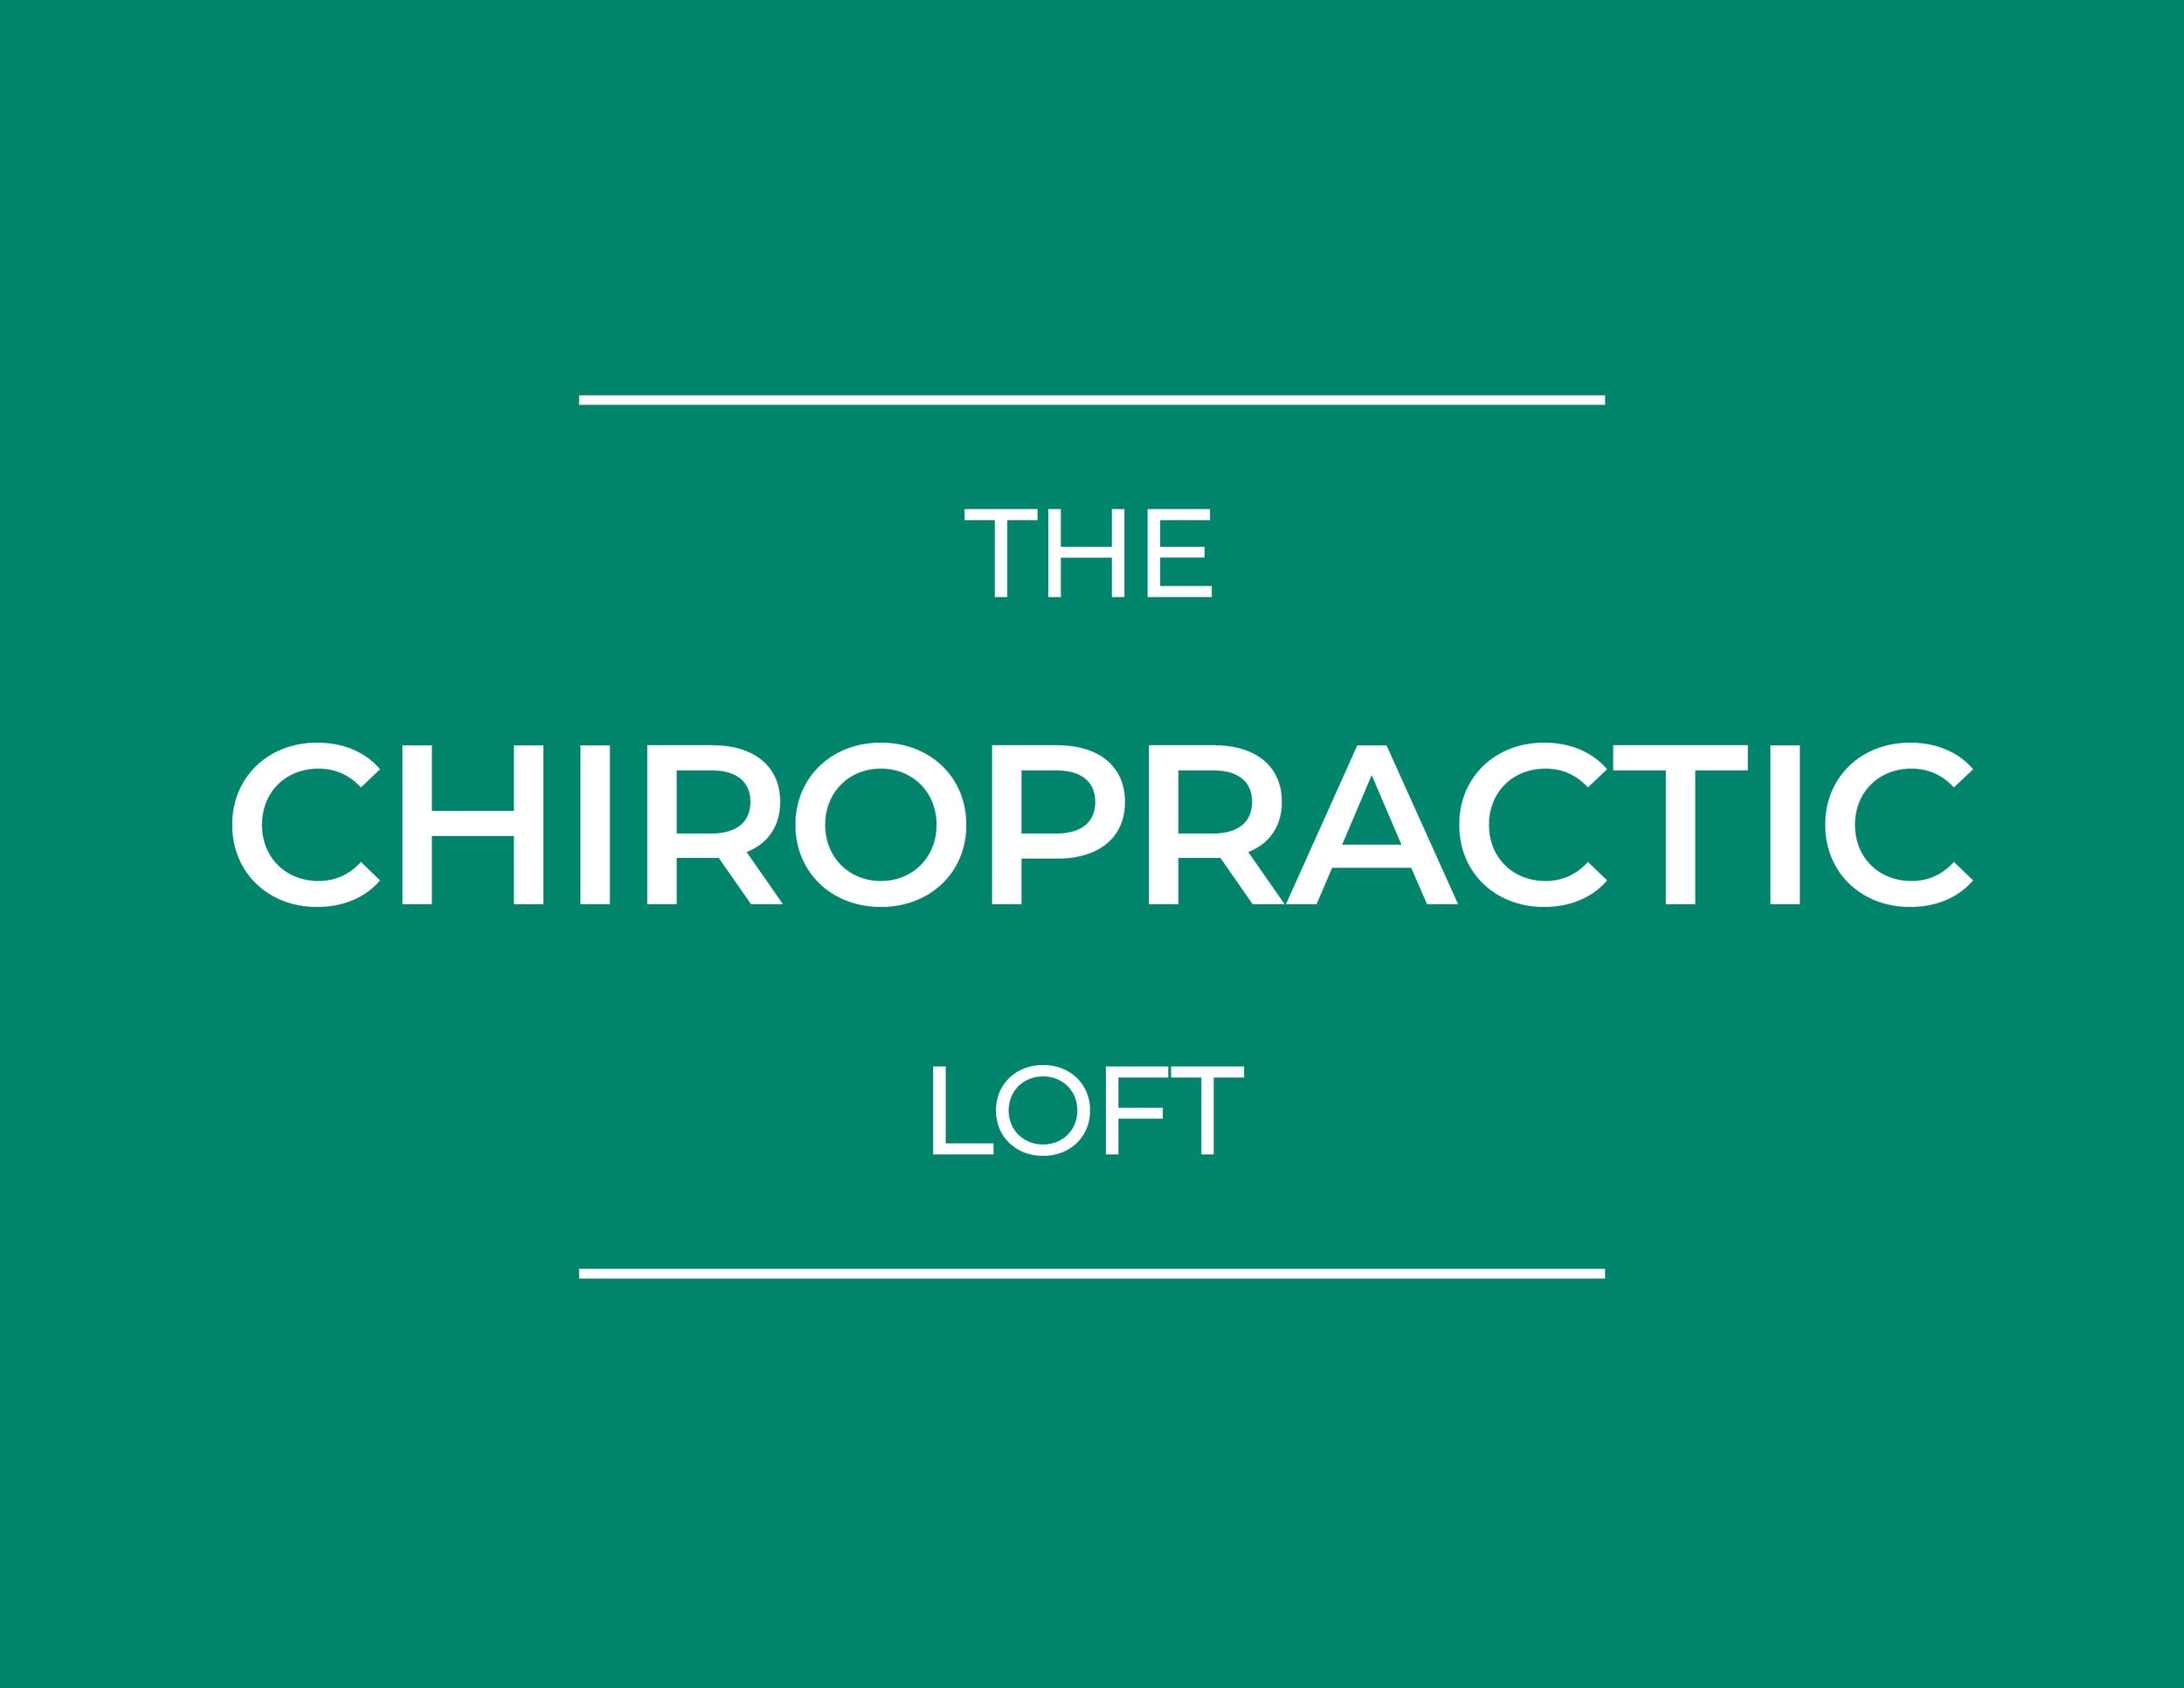 The Chiropractic Loft